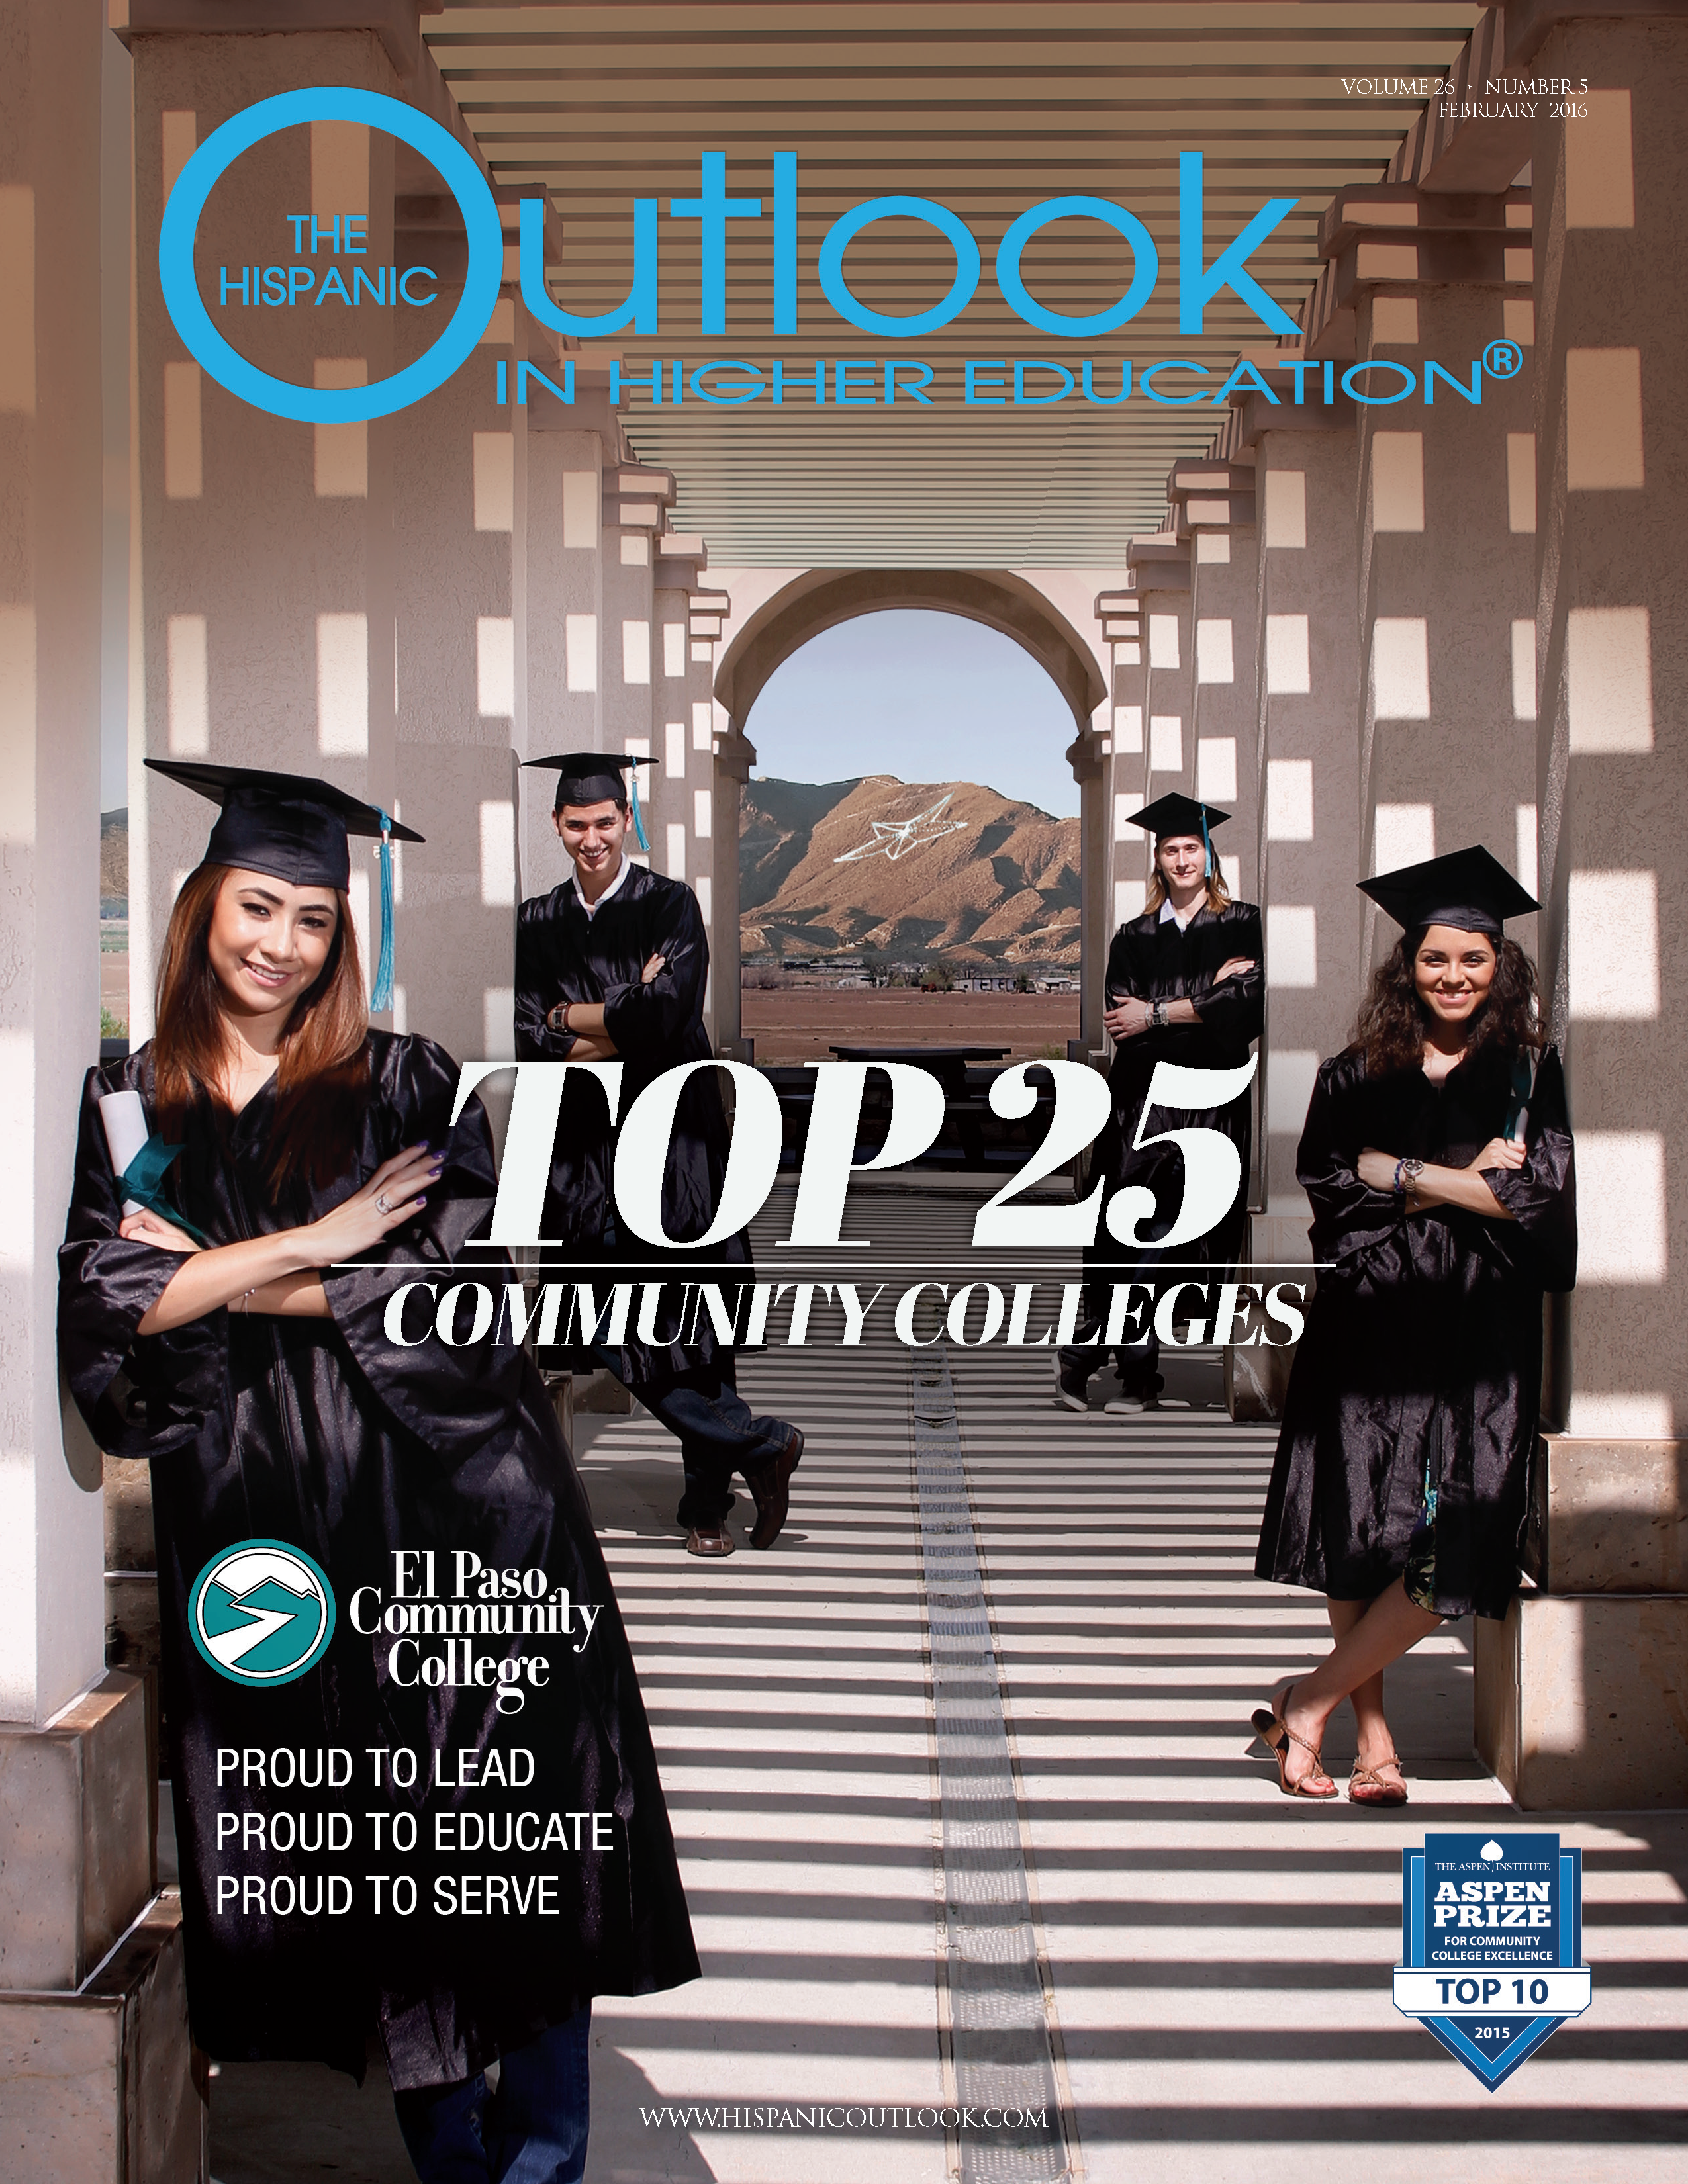 Top 25 Community College for Hispanics